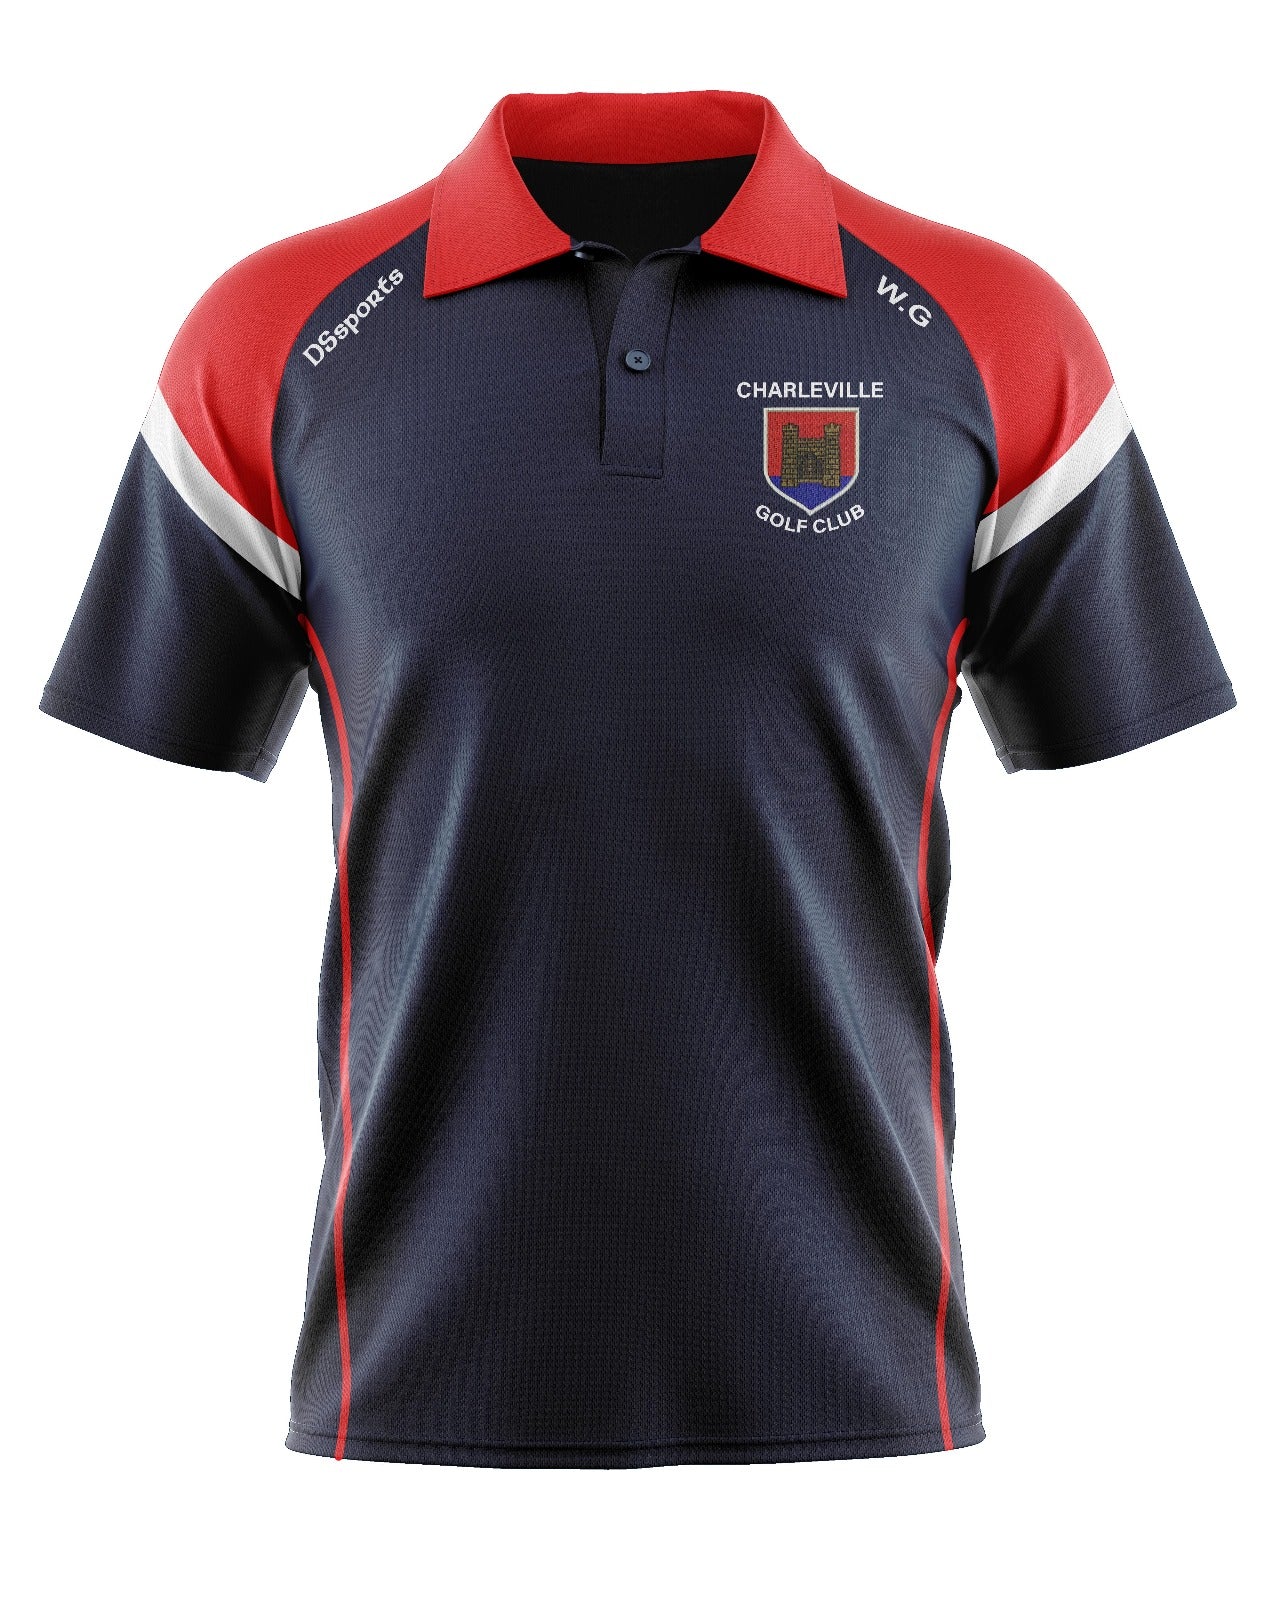 Charleville Golf Club - Polo Shirt